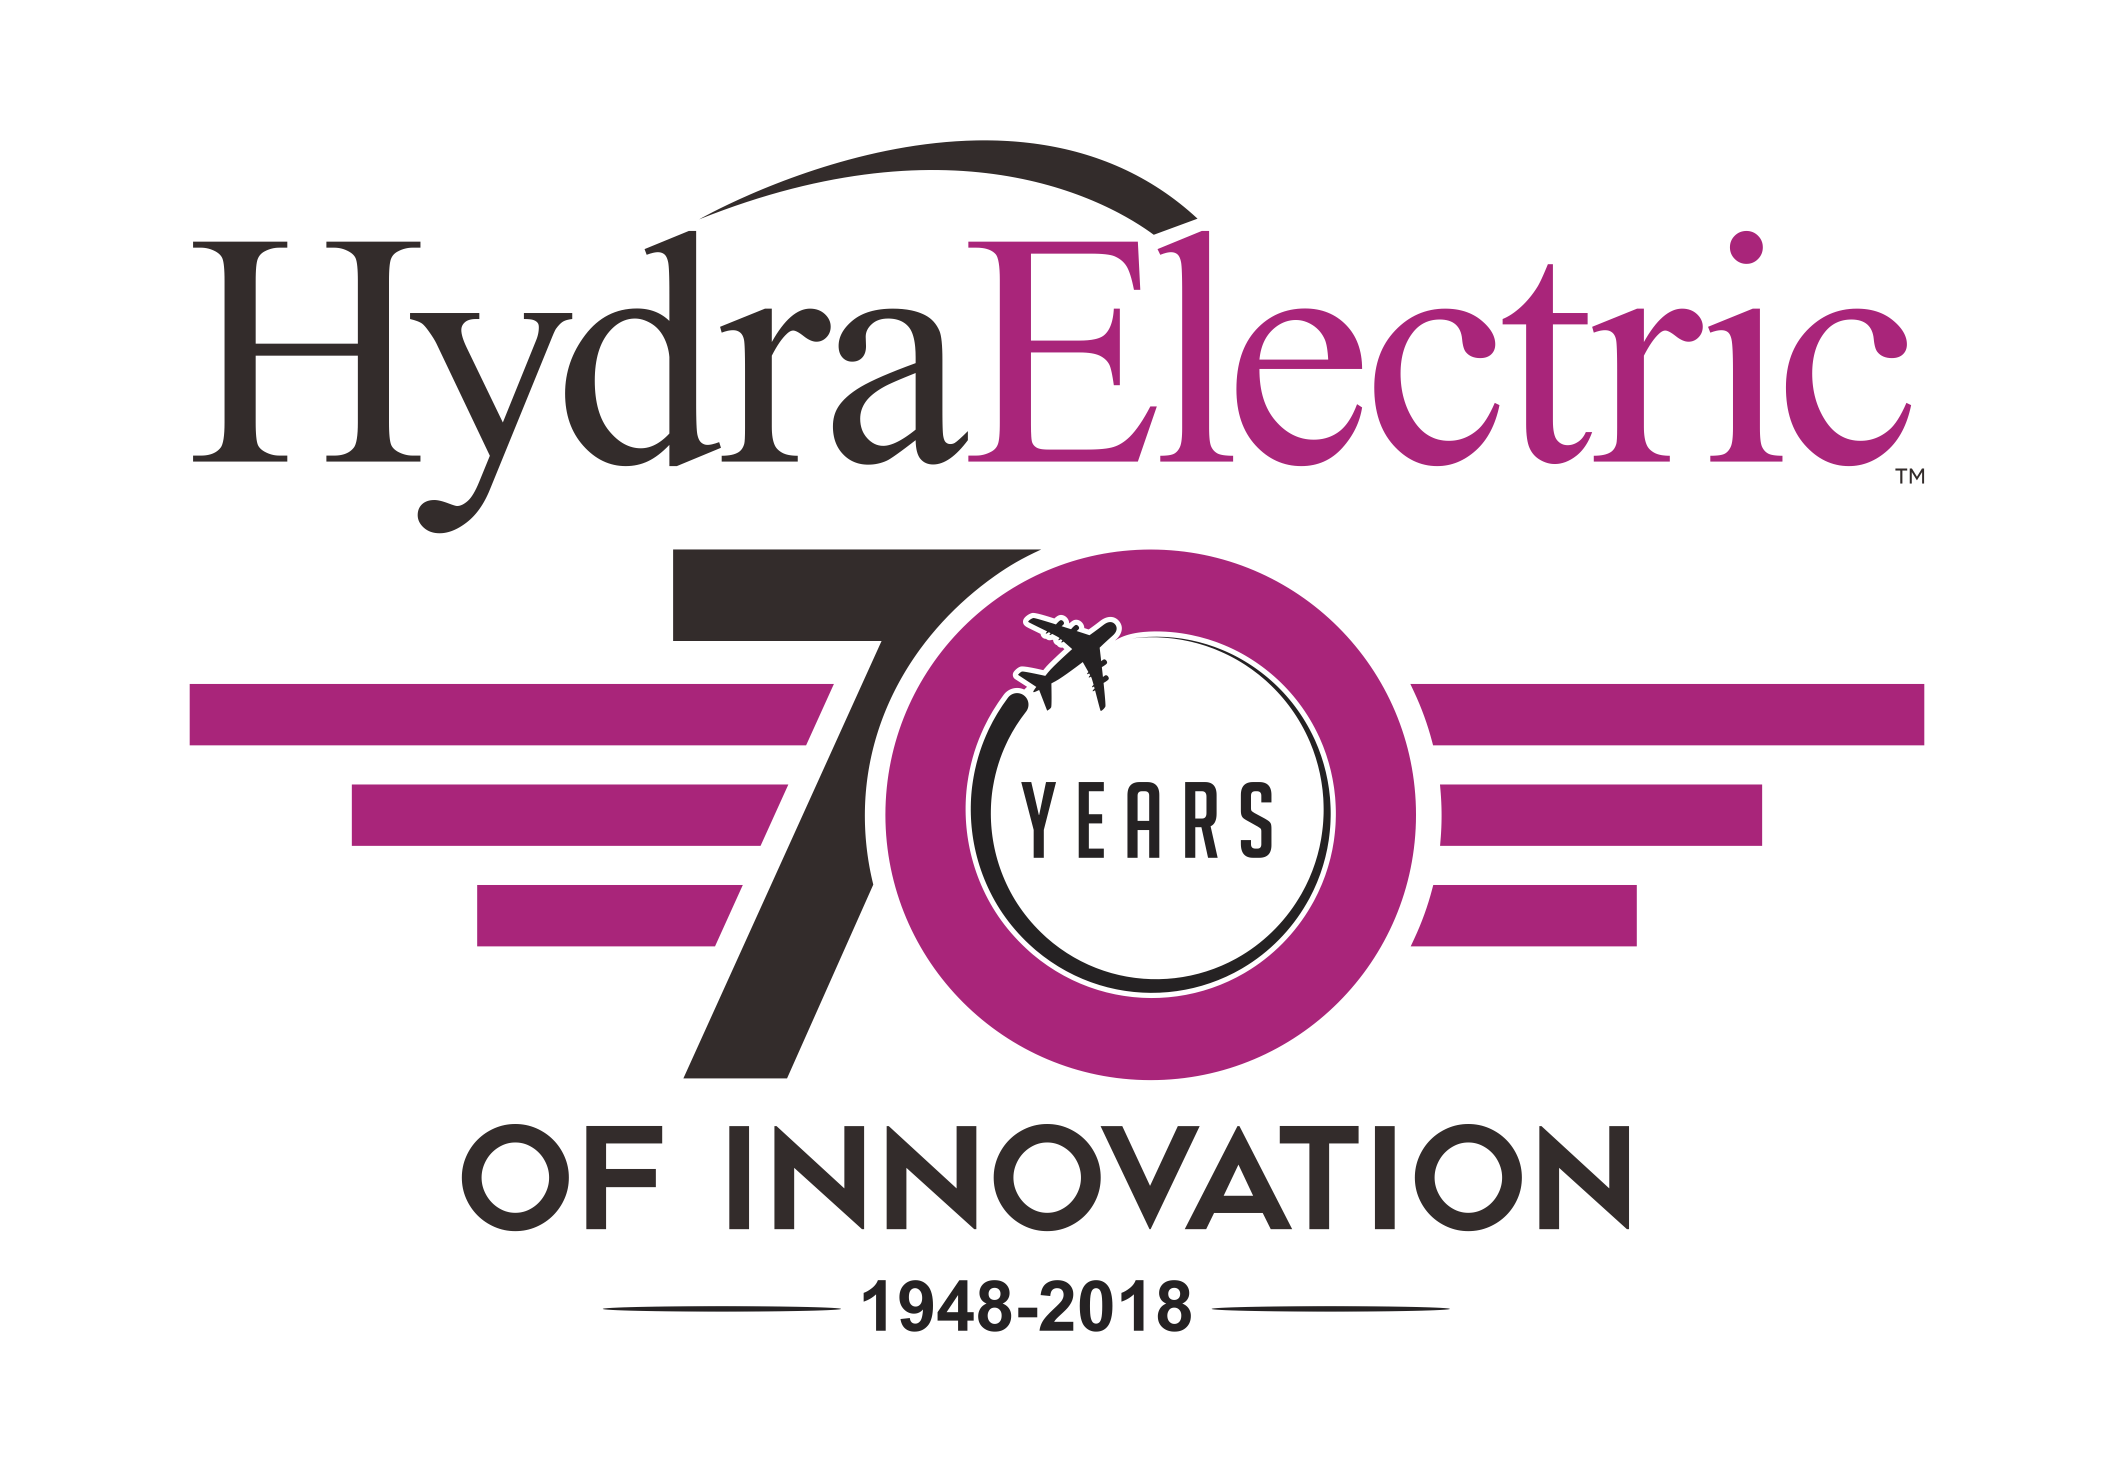 Launching Hydra-Electric’s 70th Anniversary at Farnborough International Airshow